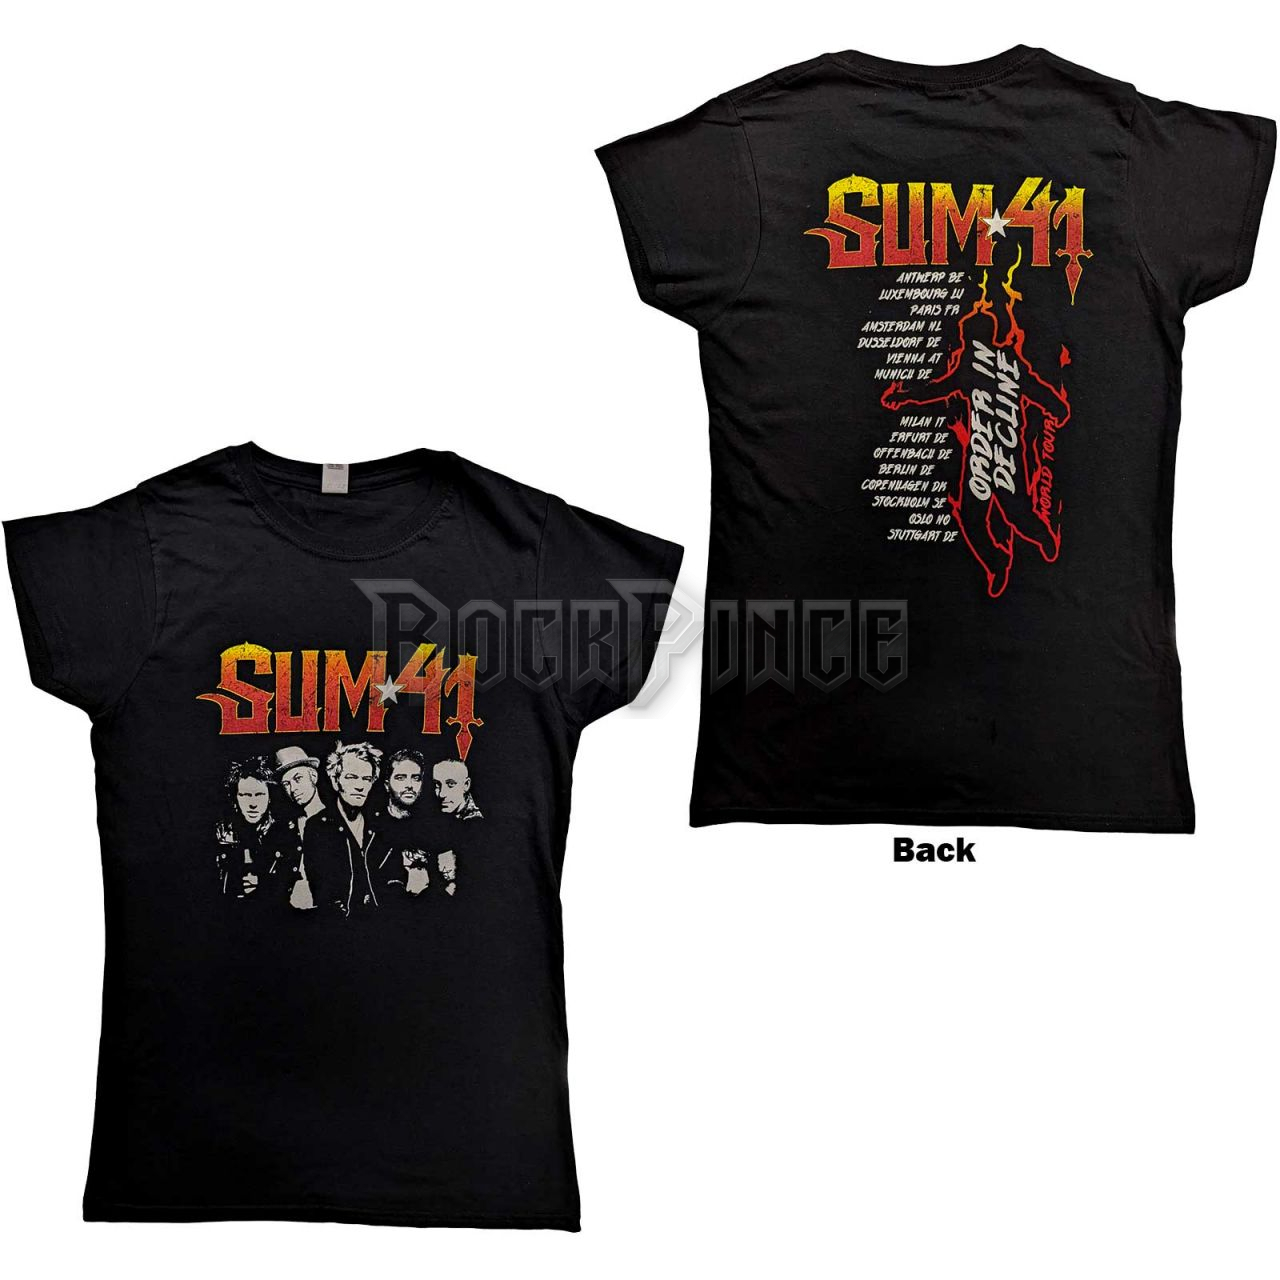 Sum 41 - Order In Decline Tour 2020 Band Photo - női póló - SUMTS06LB